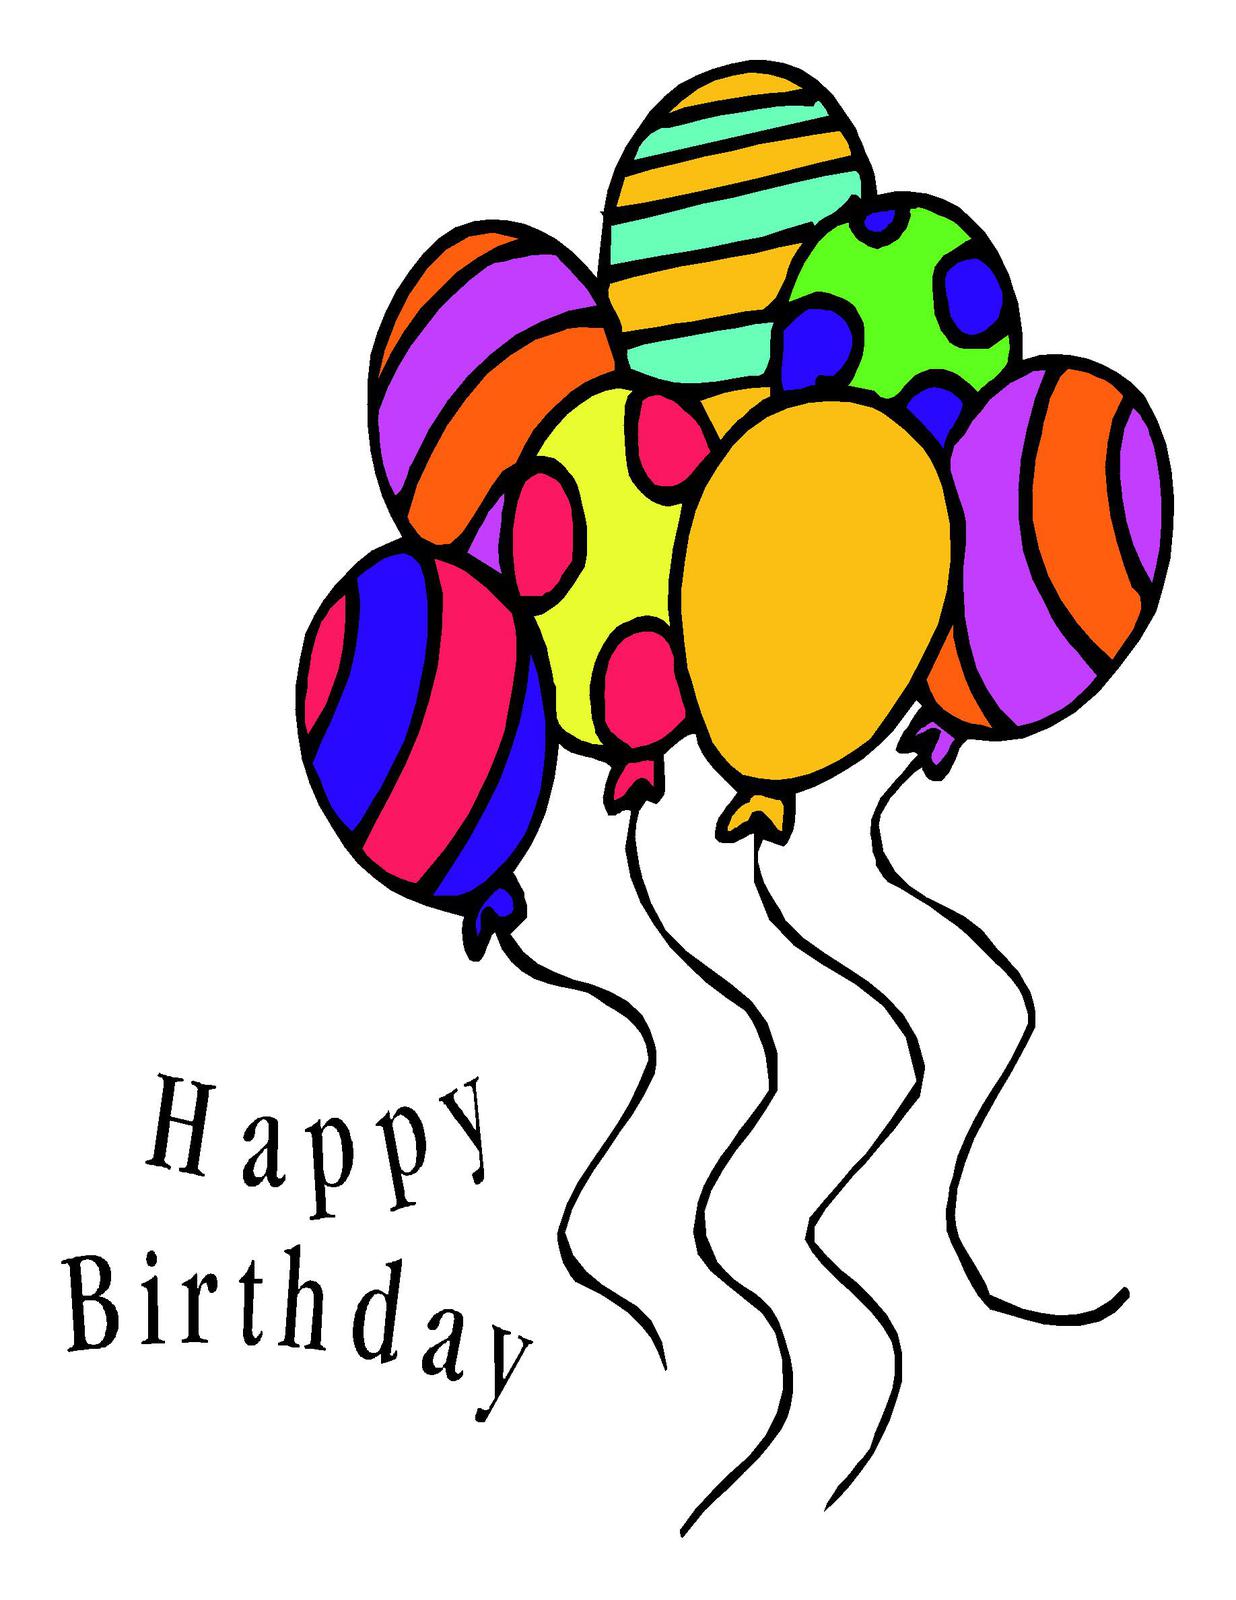 Happy Birthday Balloons2 Jpg